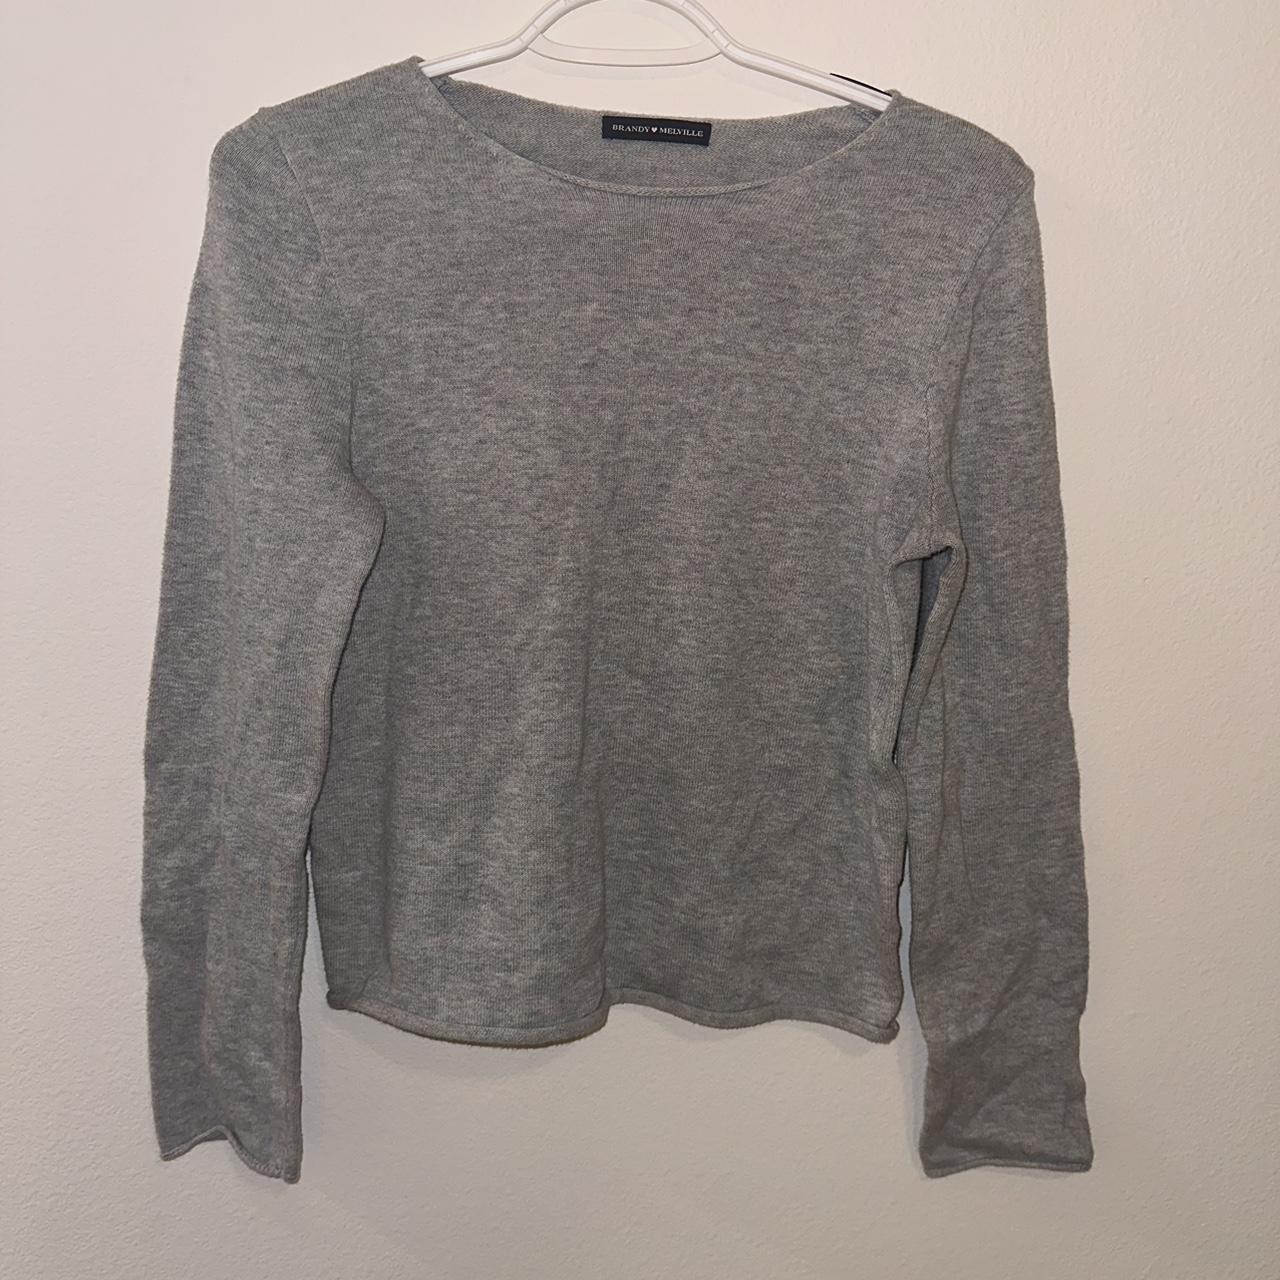 Grey brandy melville sweater - Depop